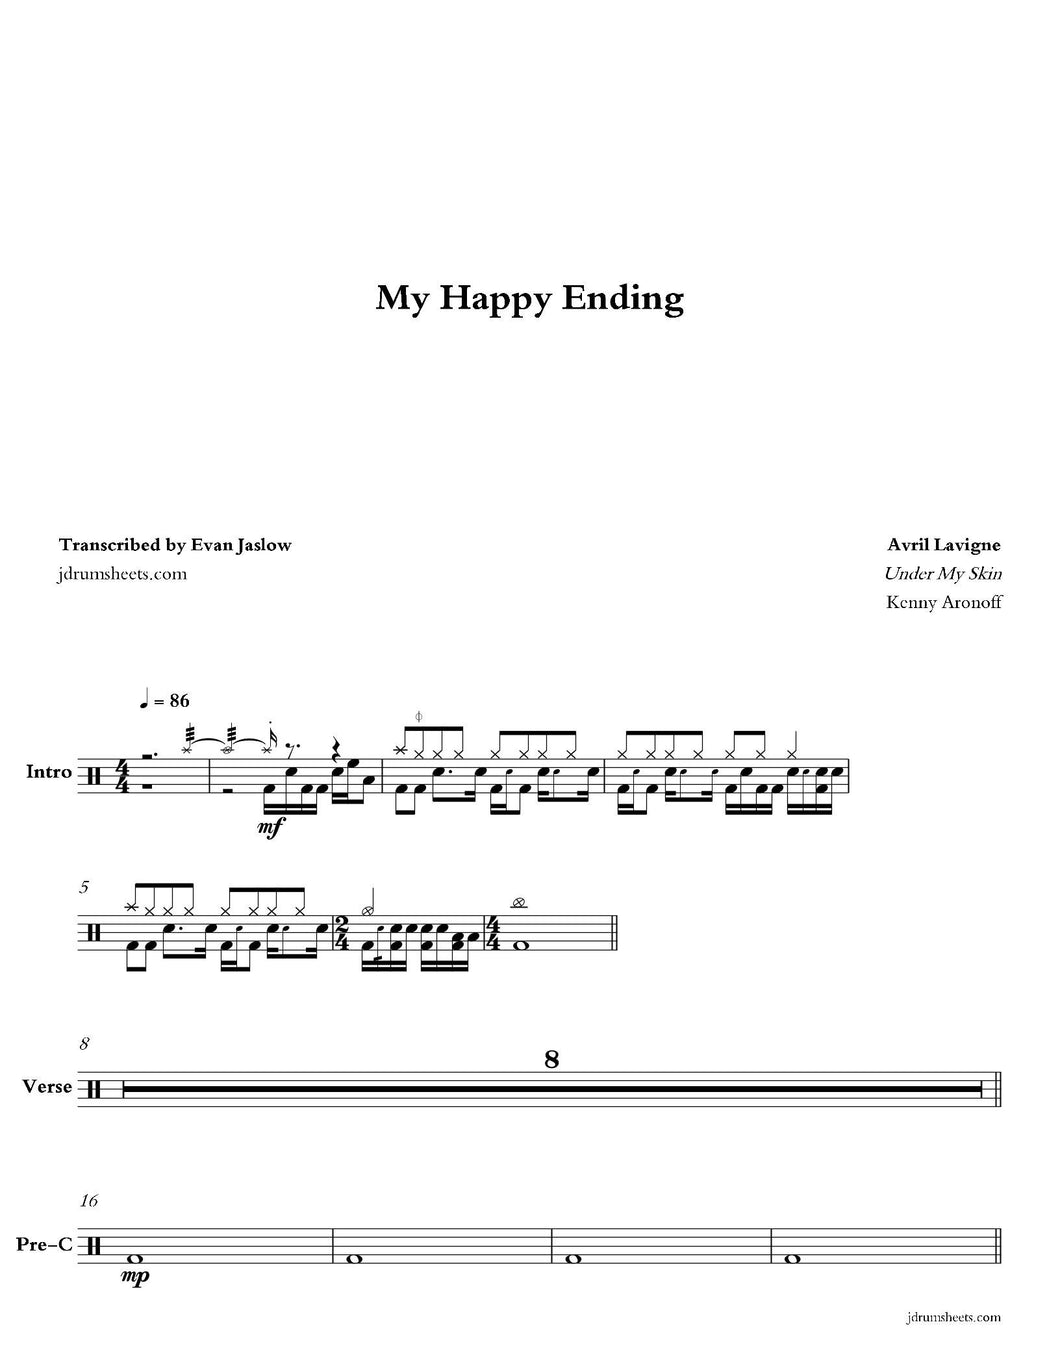 My Happy Ending - Avril Lavigne - Full Drum Transcription / Drum Sheet Music - Jaslow Drum Sheets